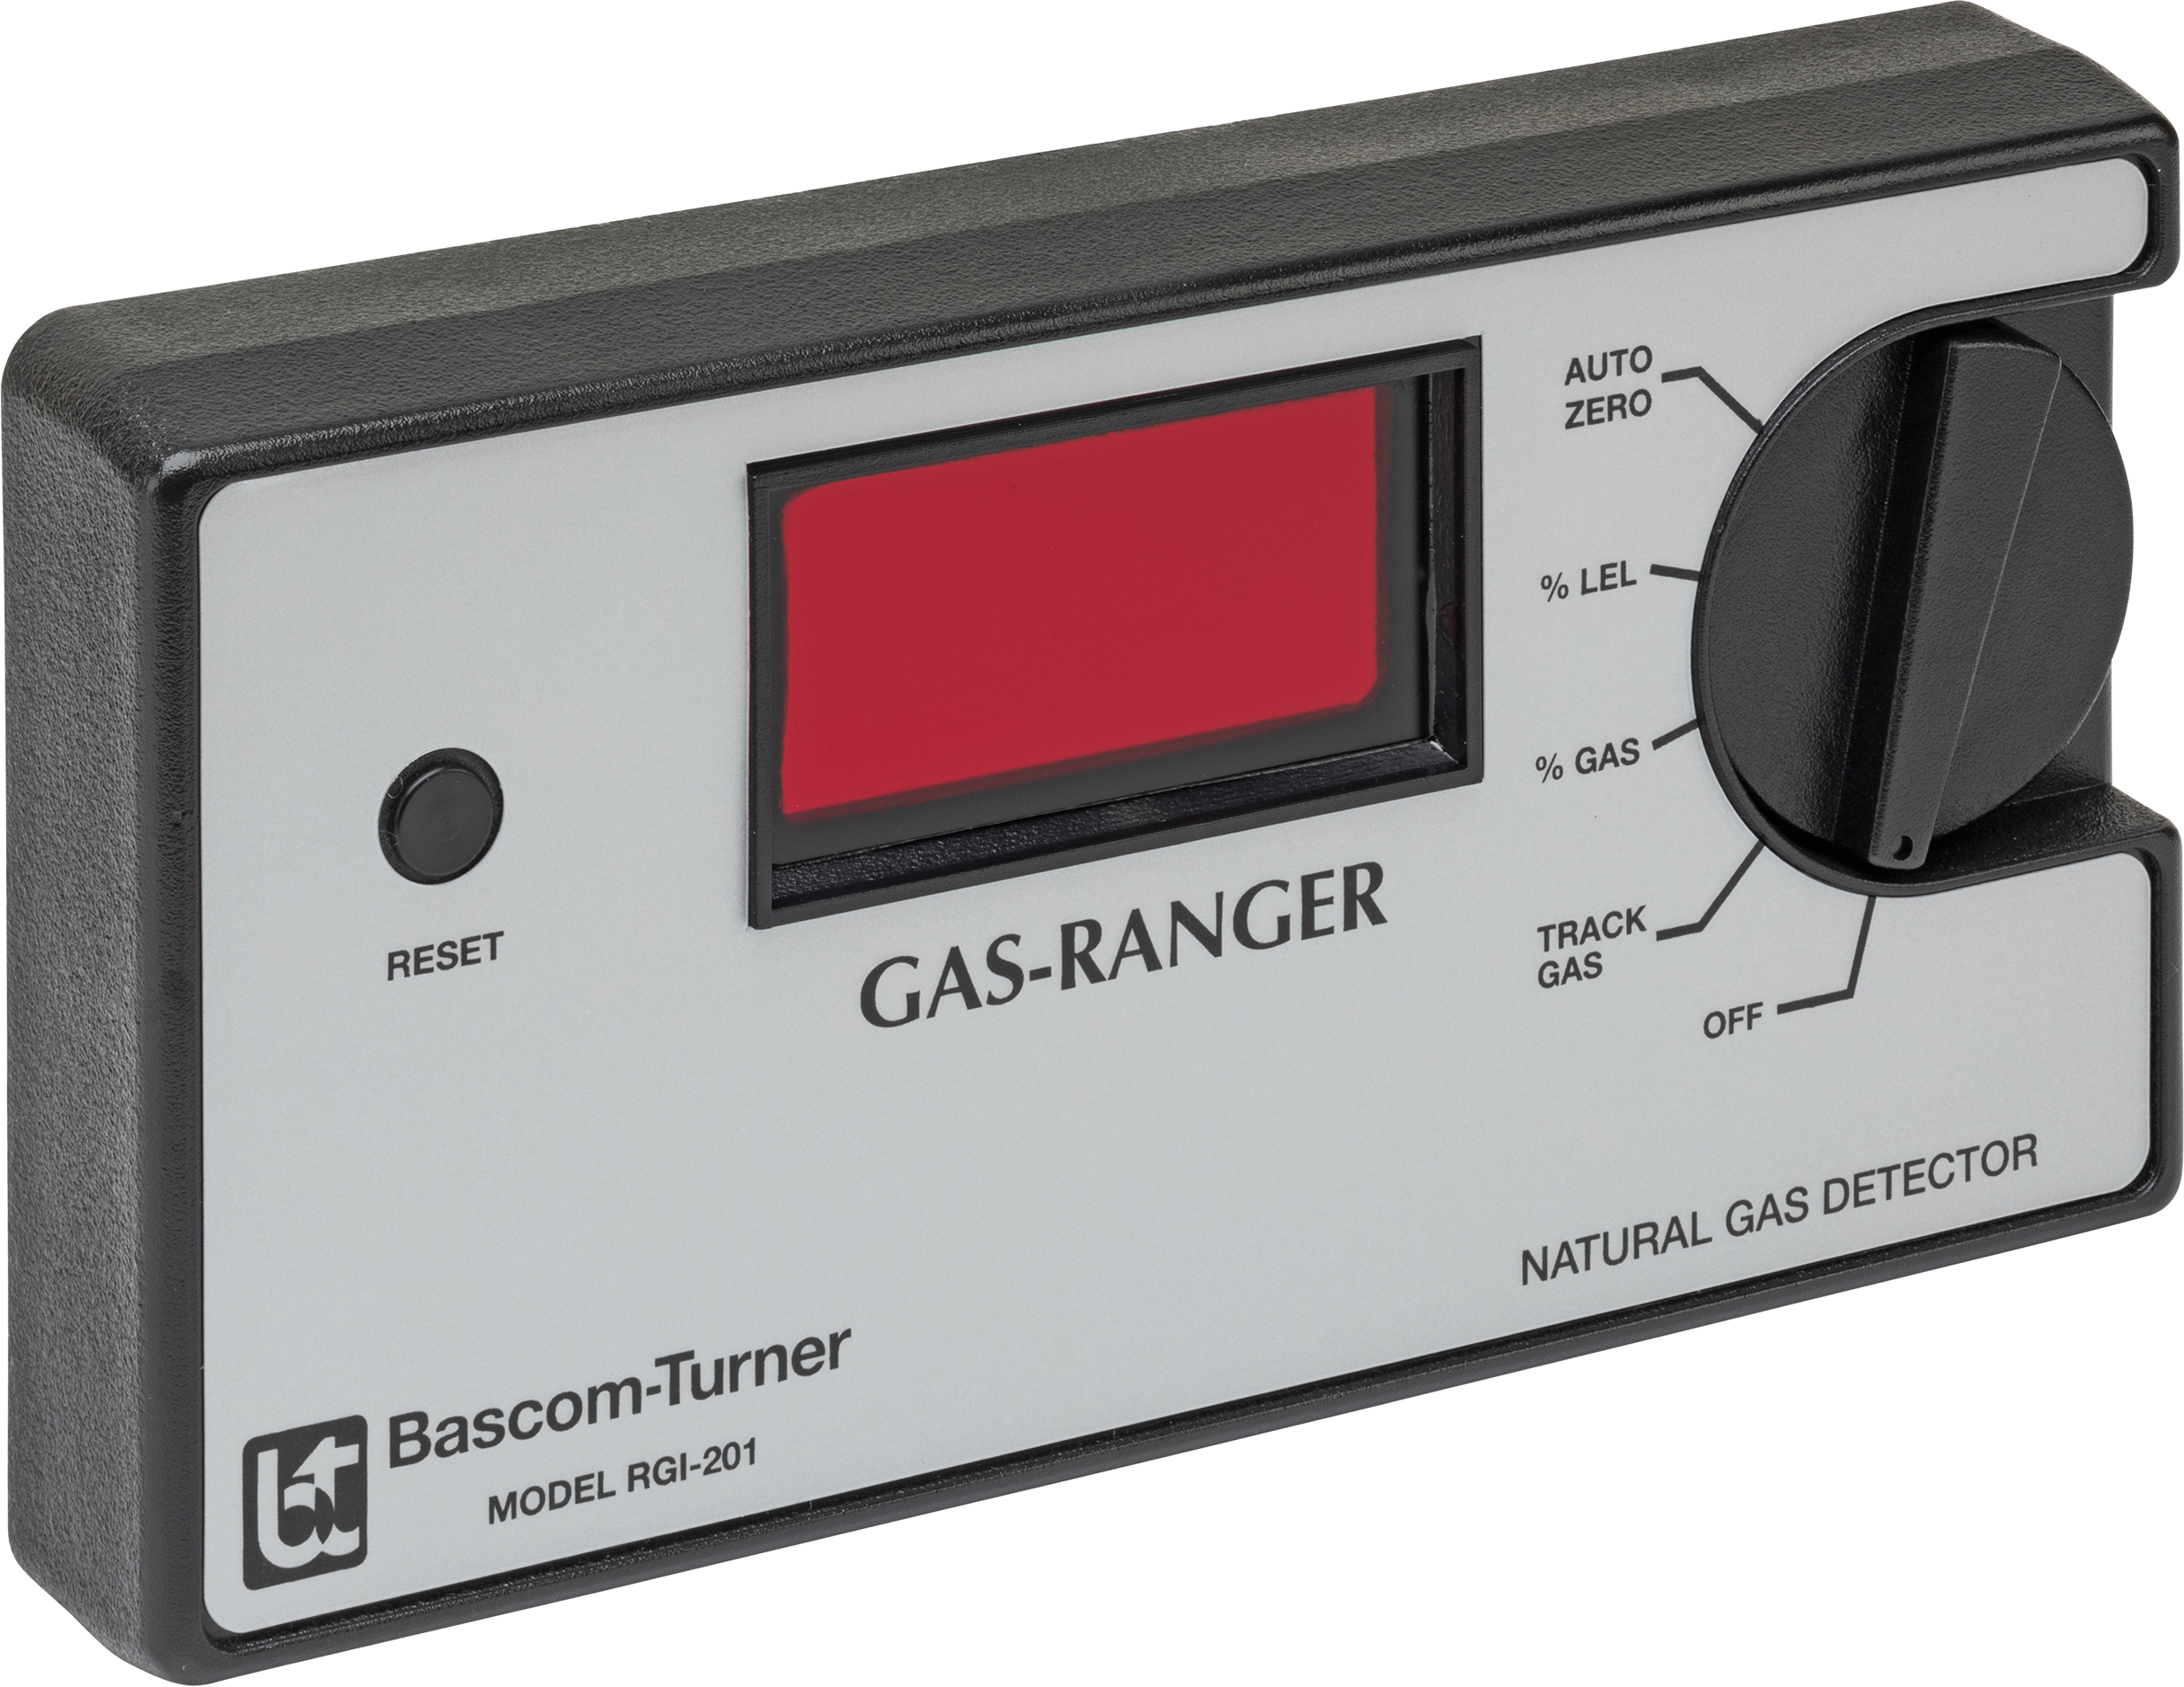 XT-### Top of case for Gas-Ranger